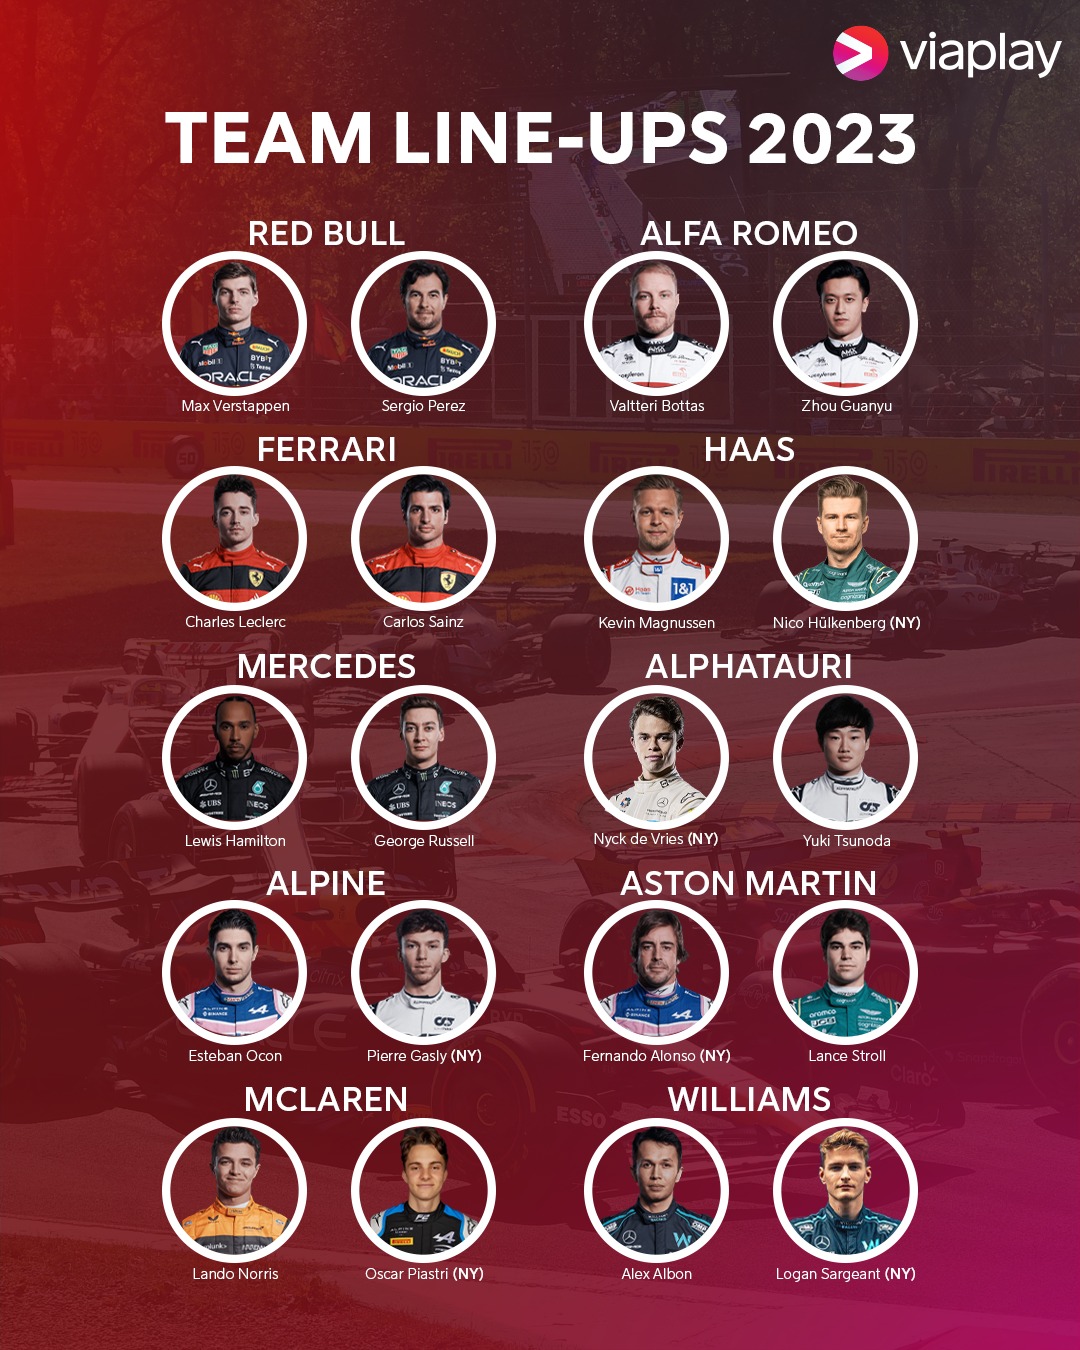 2023 Team&Driver Lineup.jpg